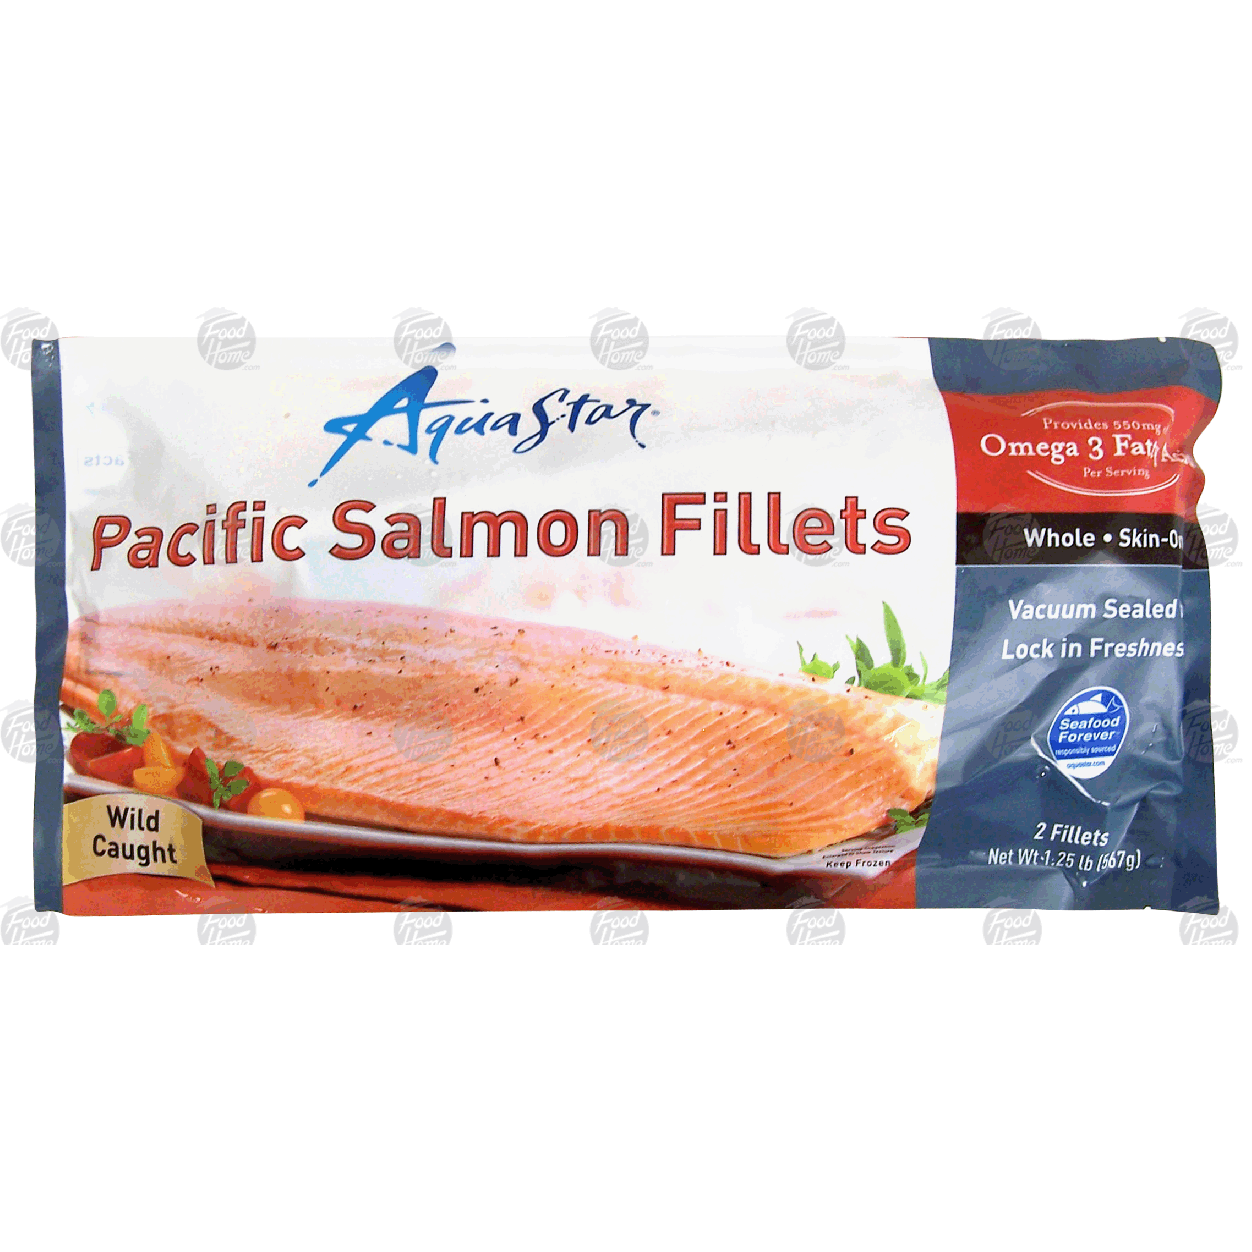 Aqua Star pacific salmon fillets, wild caught, whole, skin-on, 1.25lb